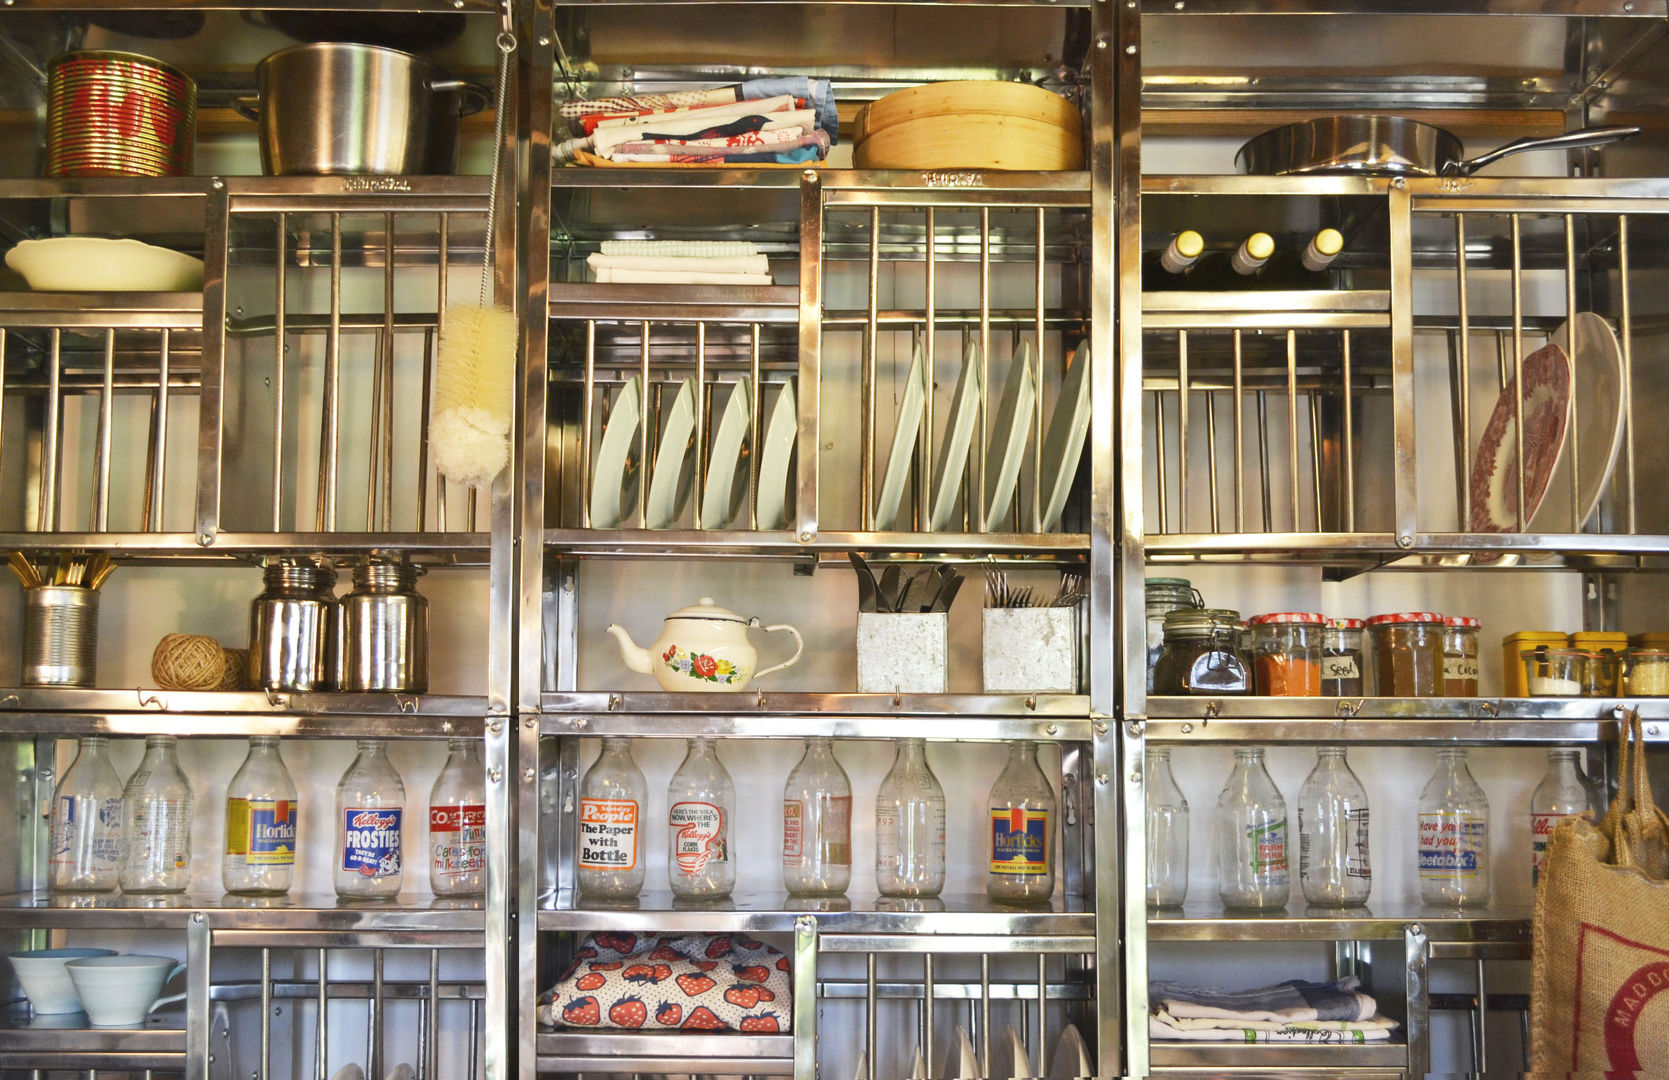 Stainless steel plate racks, The Plate Rack The Plate Rack Cocinas de estilo industrial Armarios y estanterías